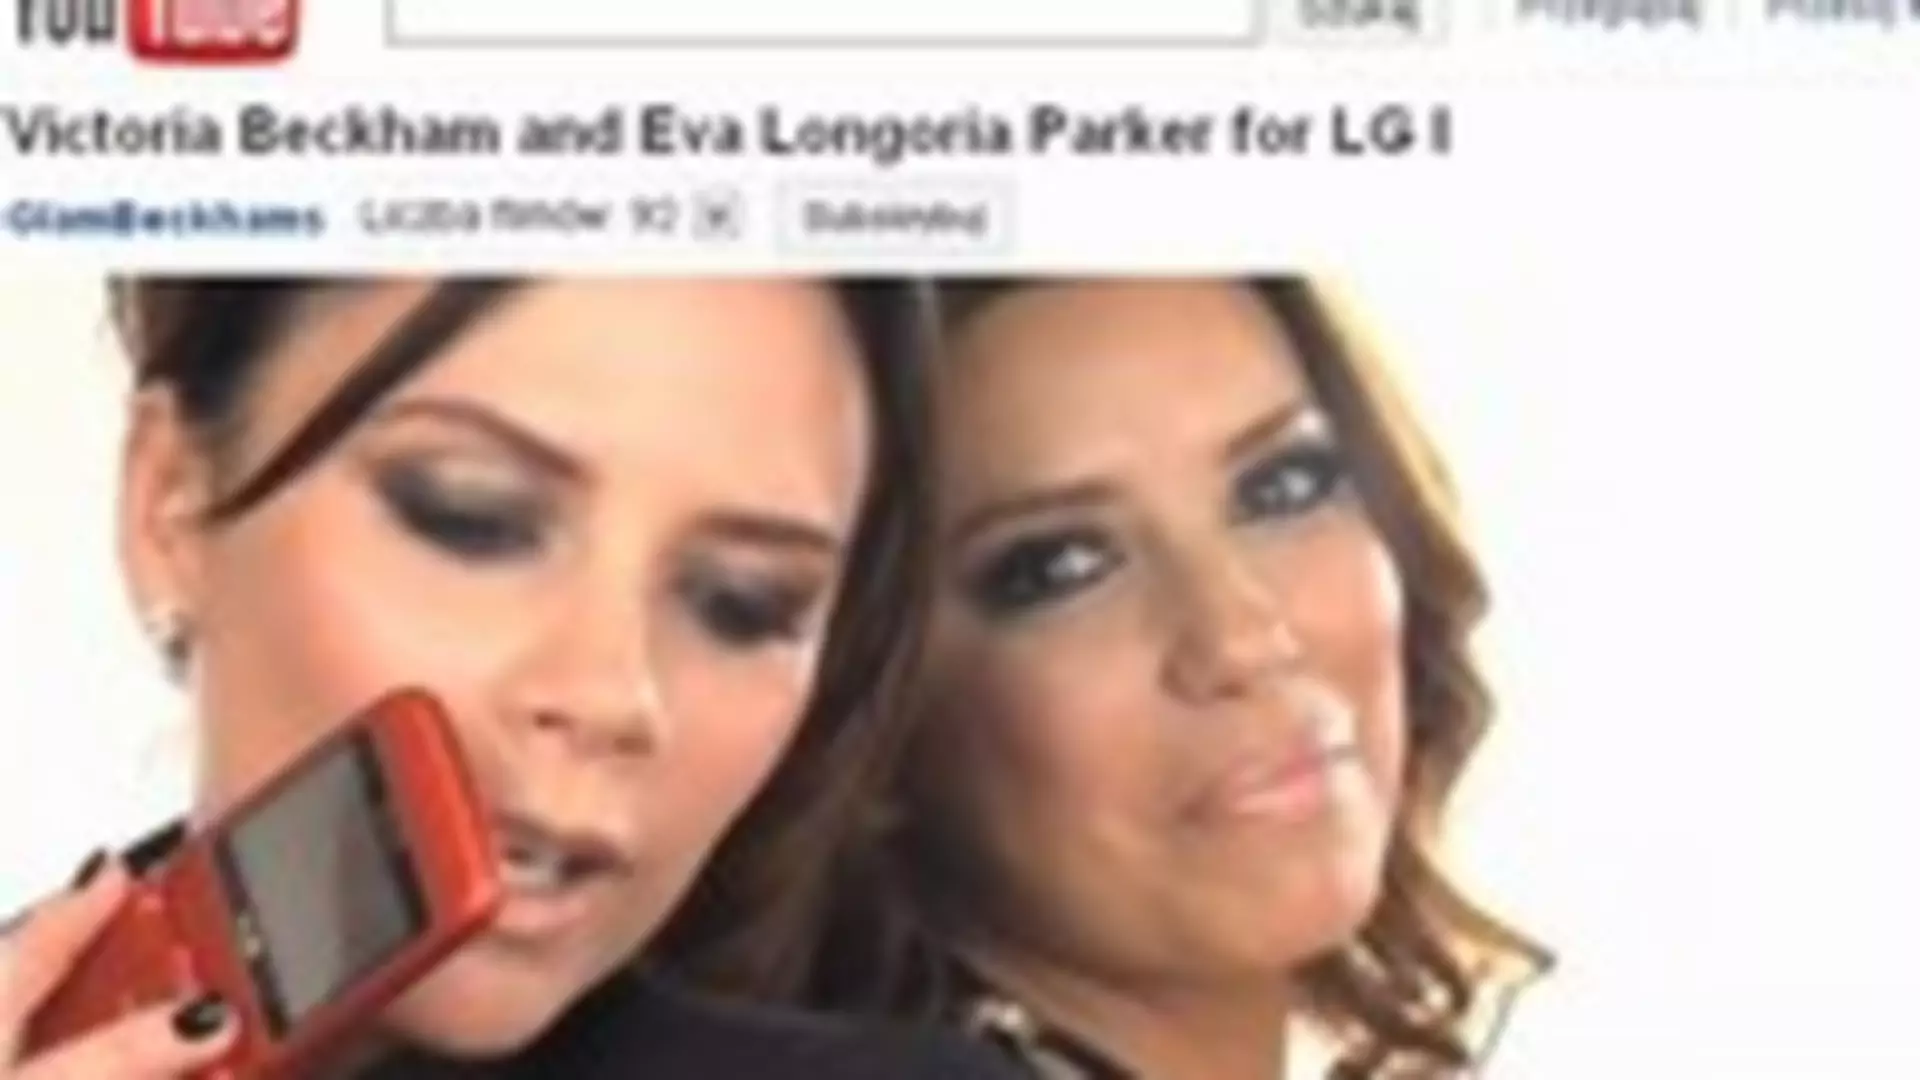 Victoria Beckham i Eva Longoria reklamują telefony LG!